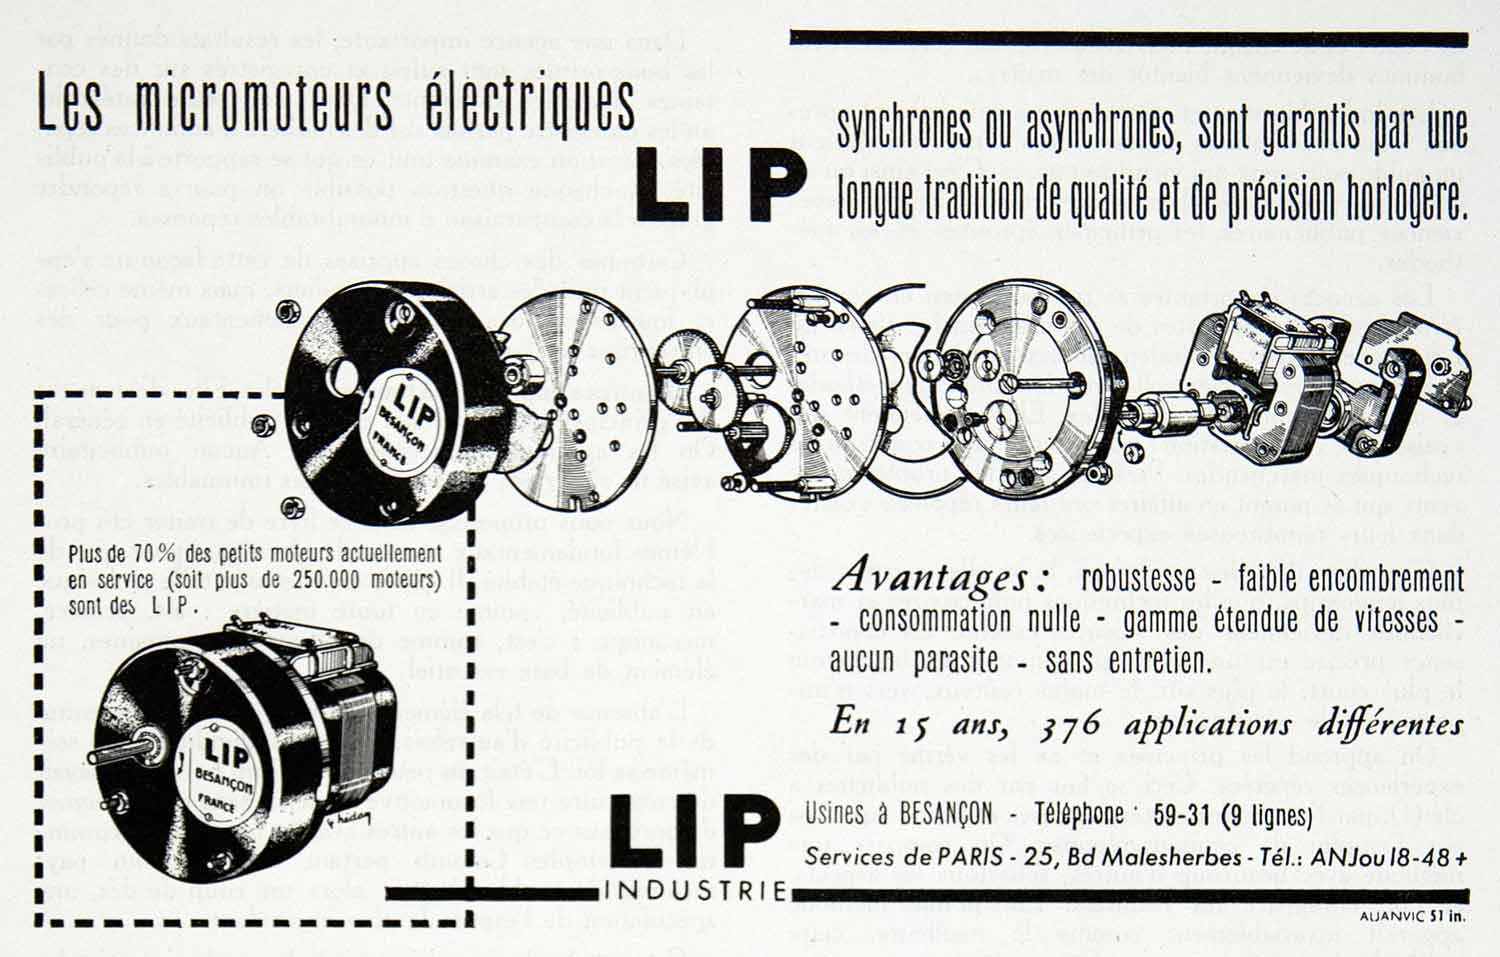 1954 Ad Electric Micromotor Motor 25 Boulevard Malesherbes Gears Industrial VEN8